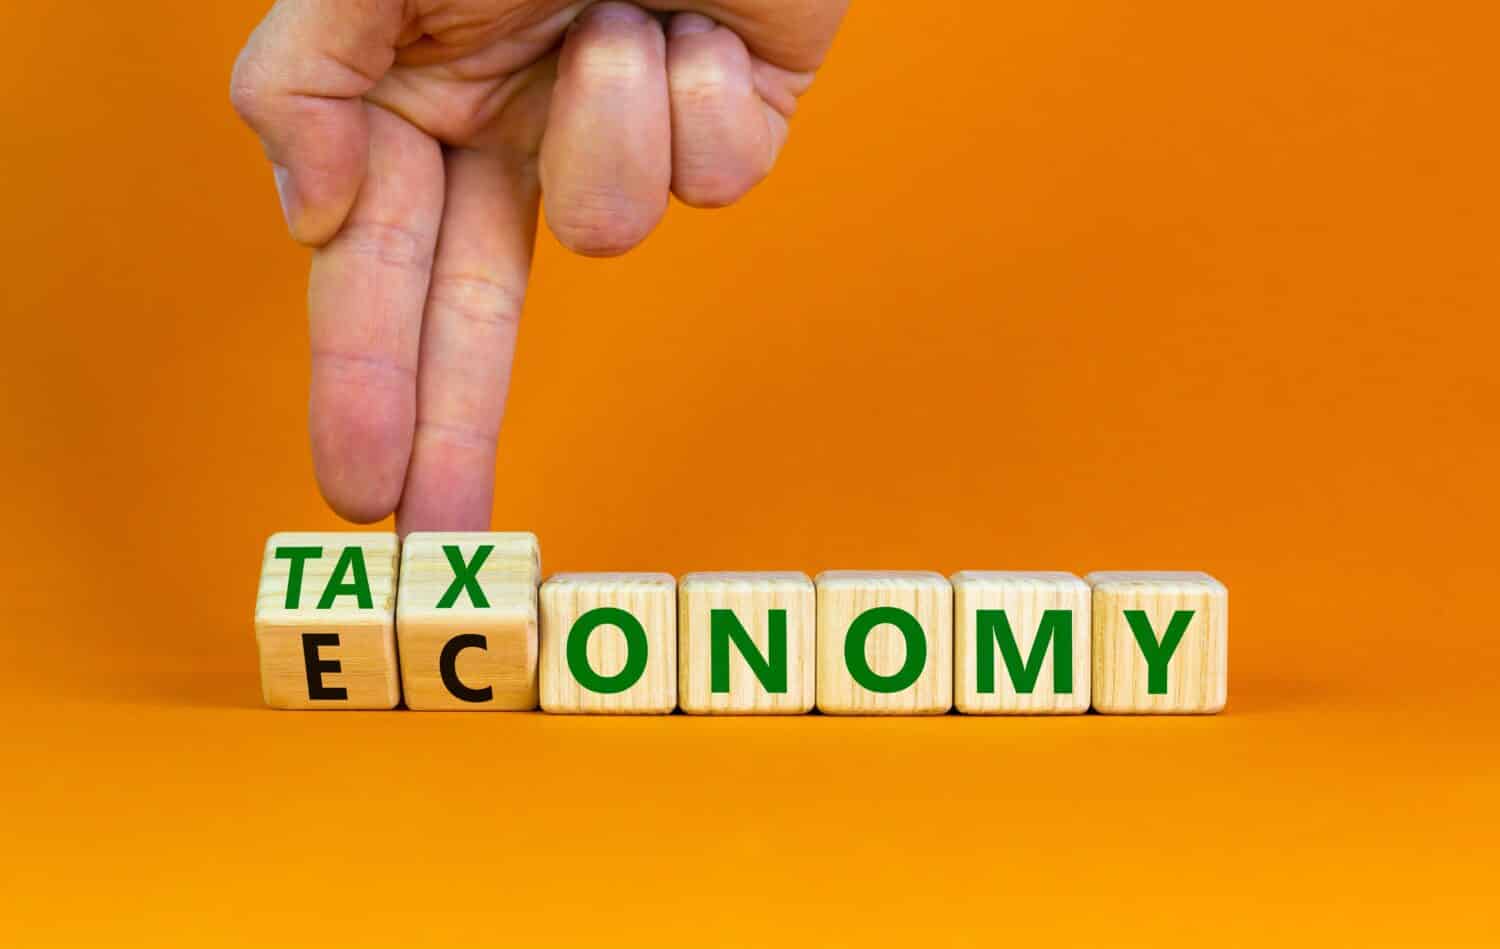 Taxonomy or economy symbol. Businessman turns cubes, changes the word economy to taxonomy. Beautiful orange table, orange background, copy space. Business, ecology and taxonomy or economy concept.